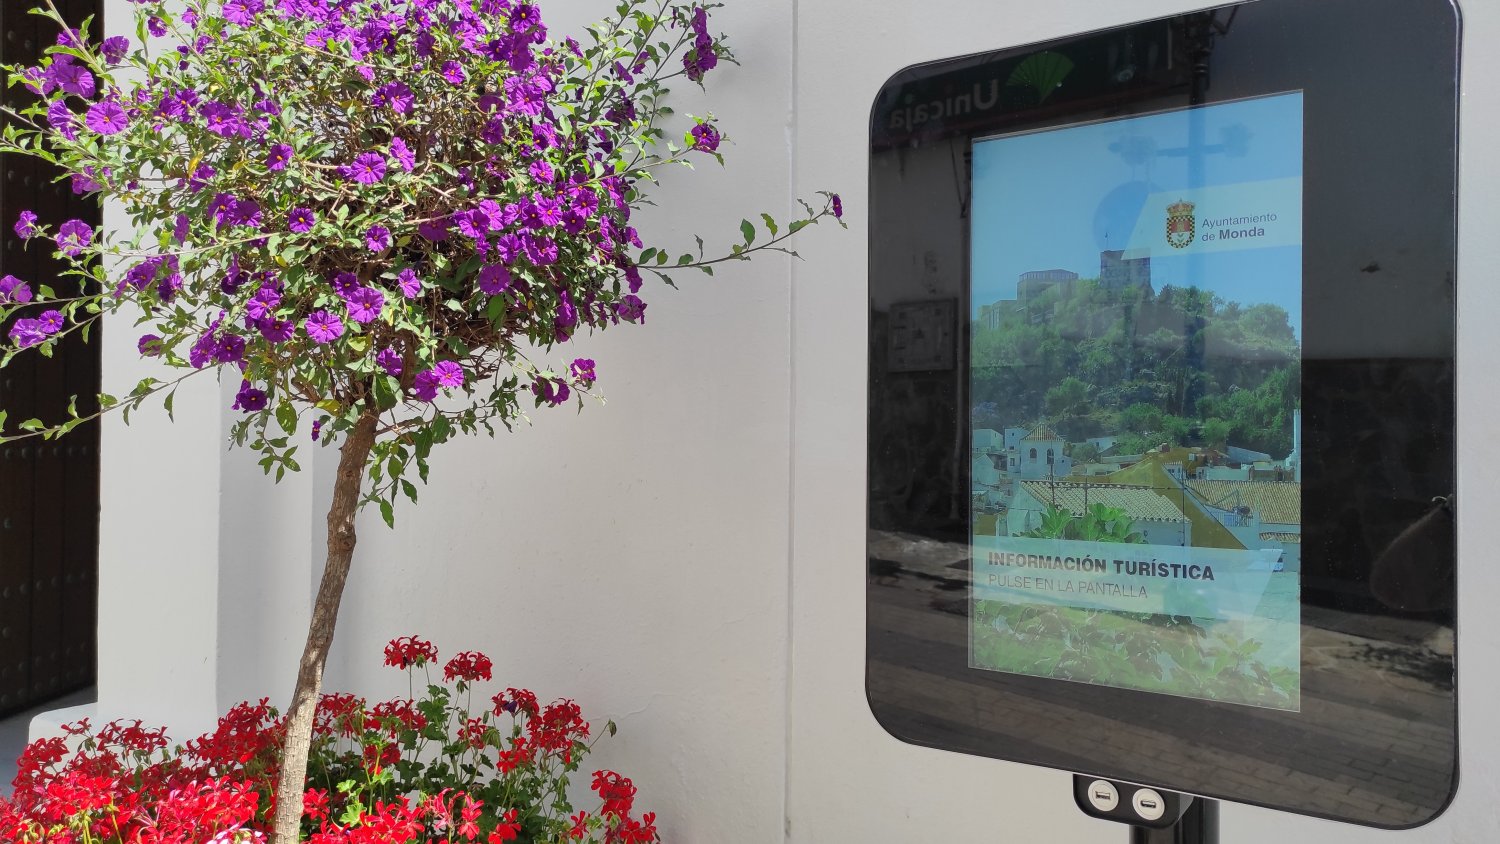 Monda incorpora tres nuevos paneles interactivos de información turística